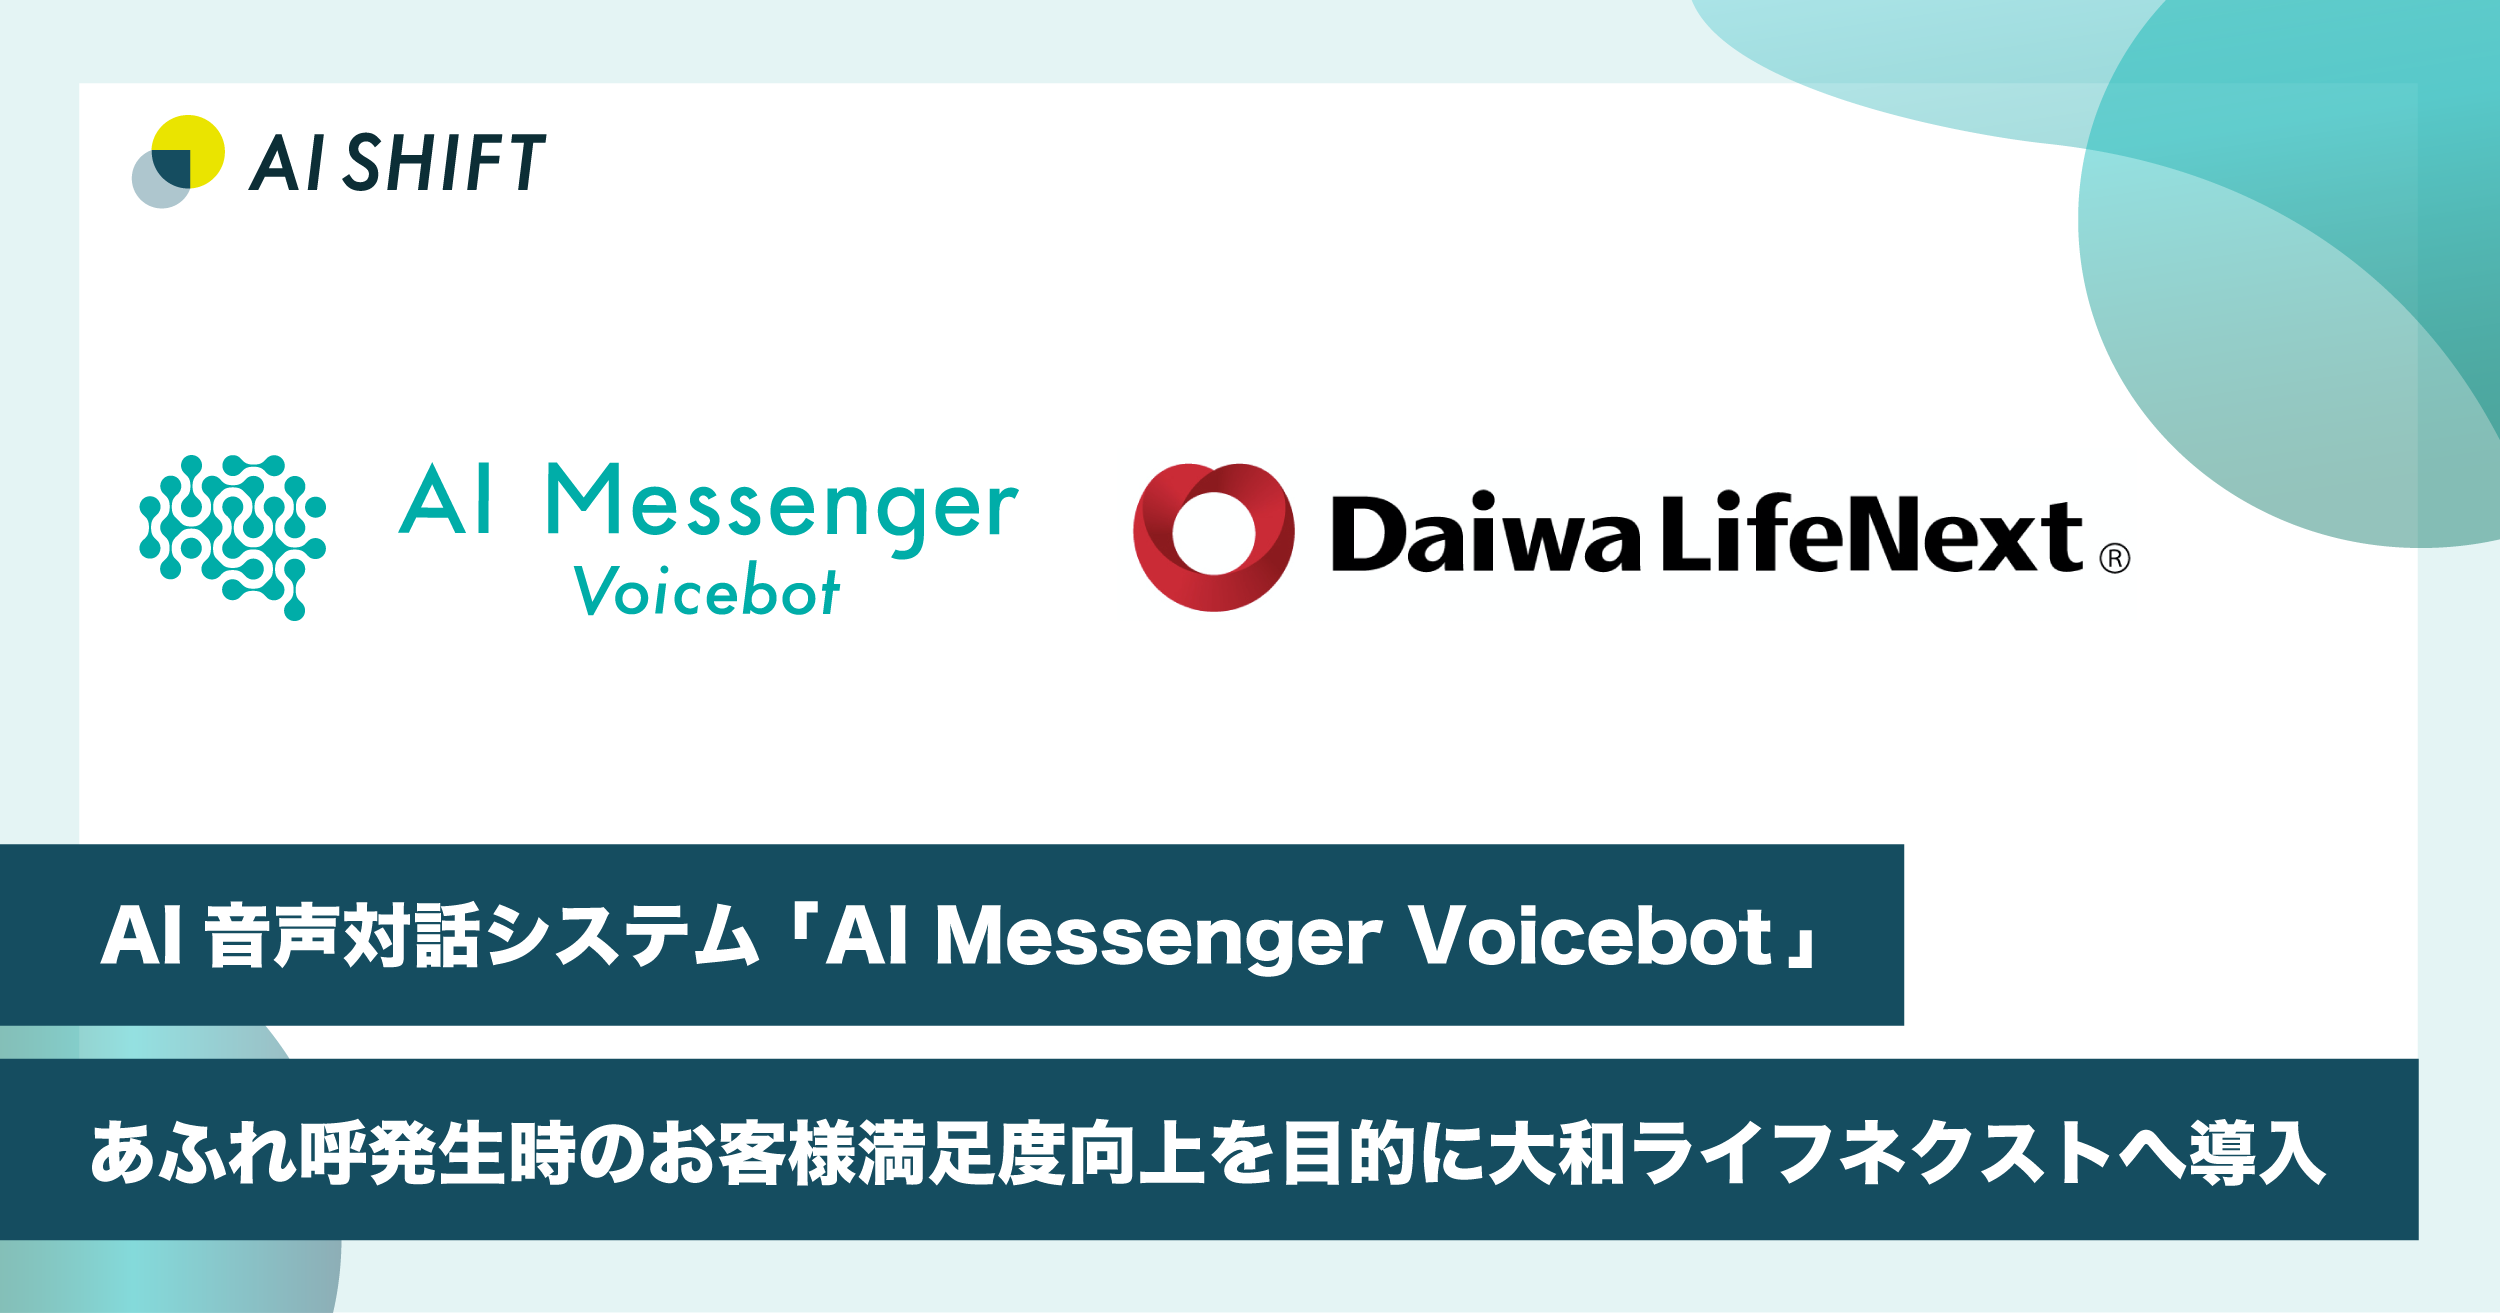 AI自動音声対話システム「AI Messenger Voicebot」、 電話集中（あふれ呼）時のお客様満足度向上を目的に 大和ライフネクストへ導入